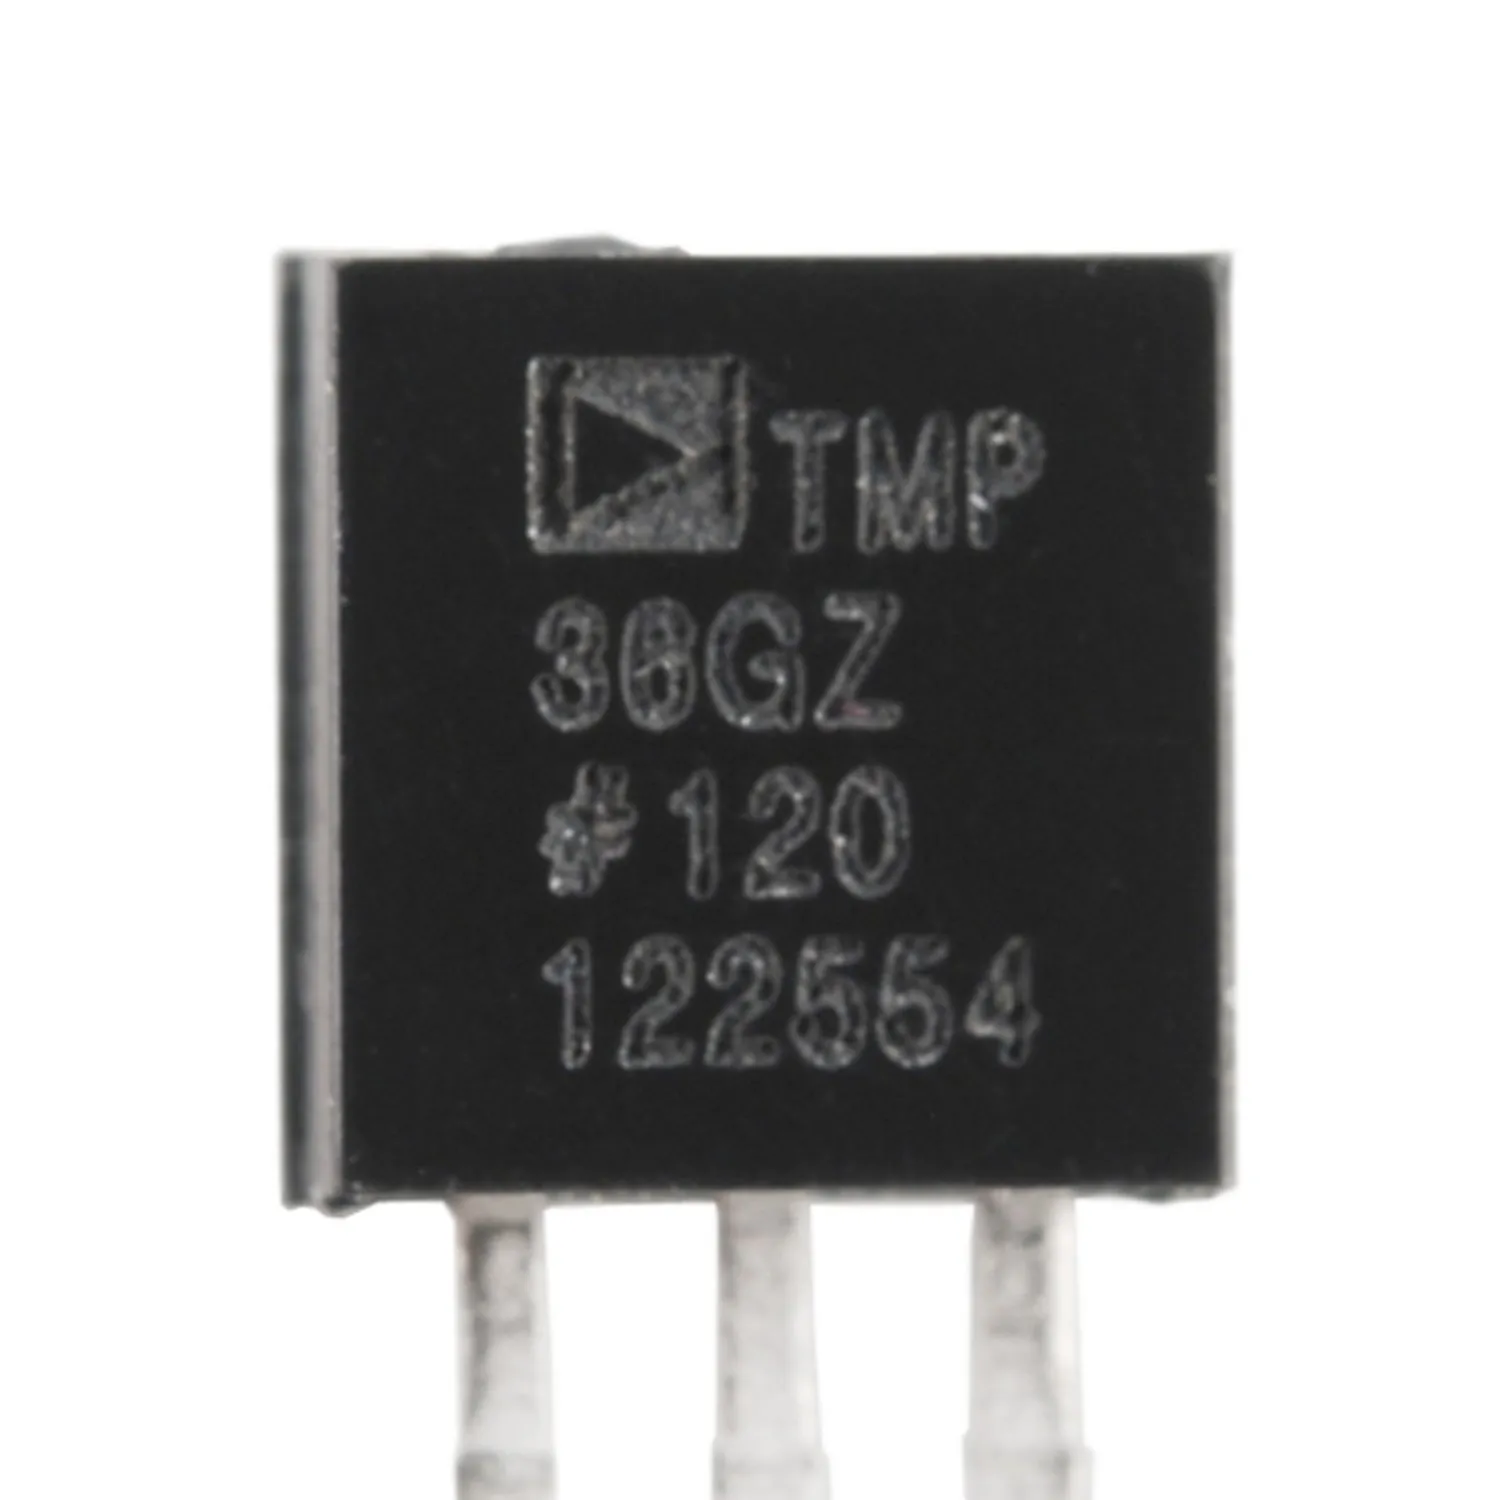 Photo of Temperature Sensor - TMP36